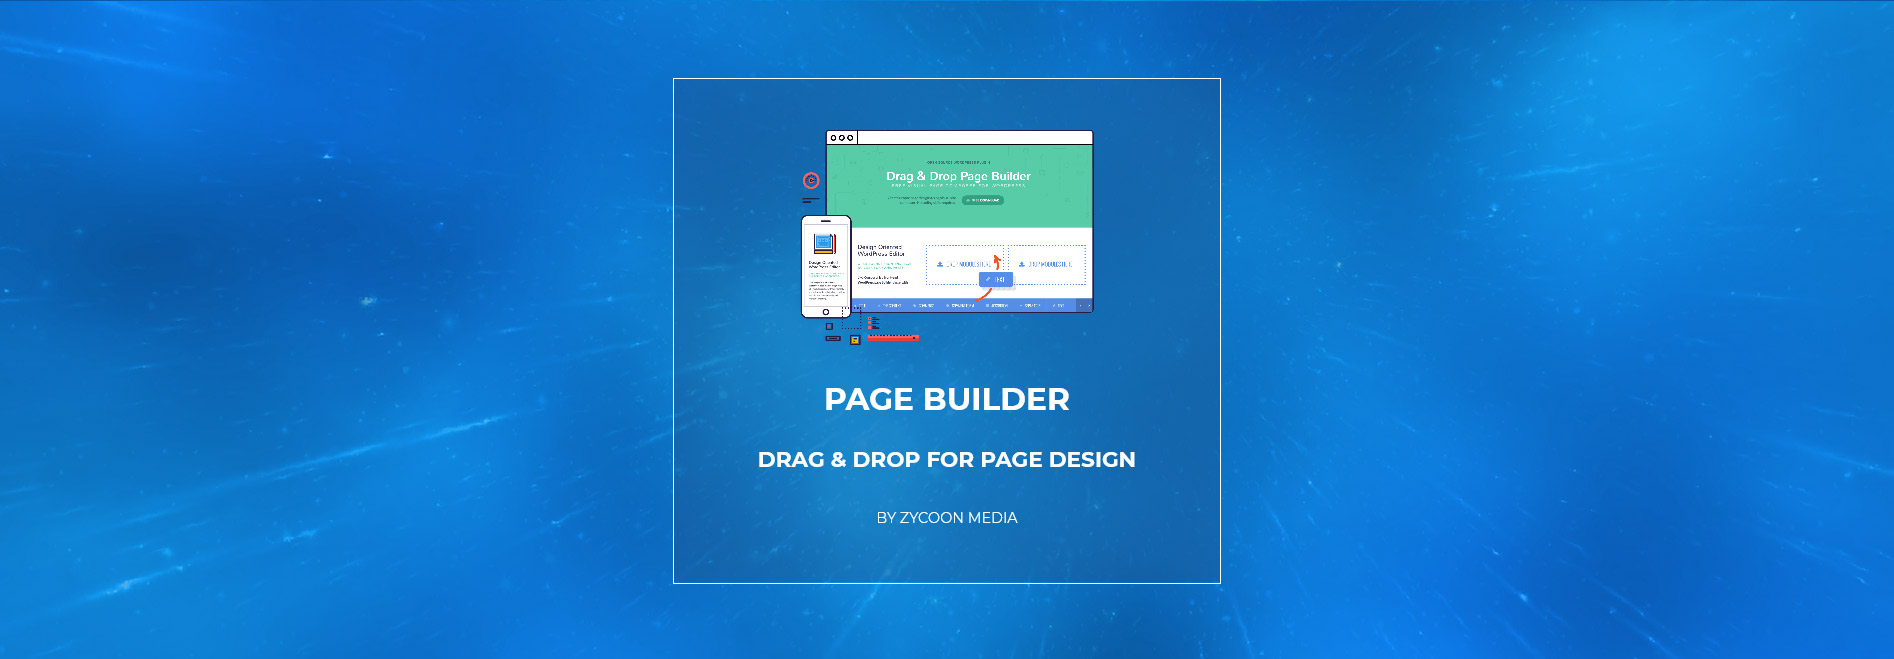 Web Design Using Page Builder